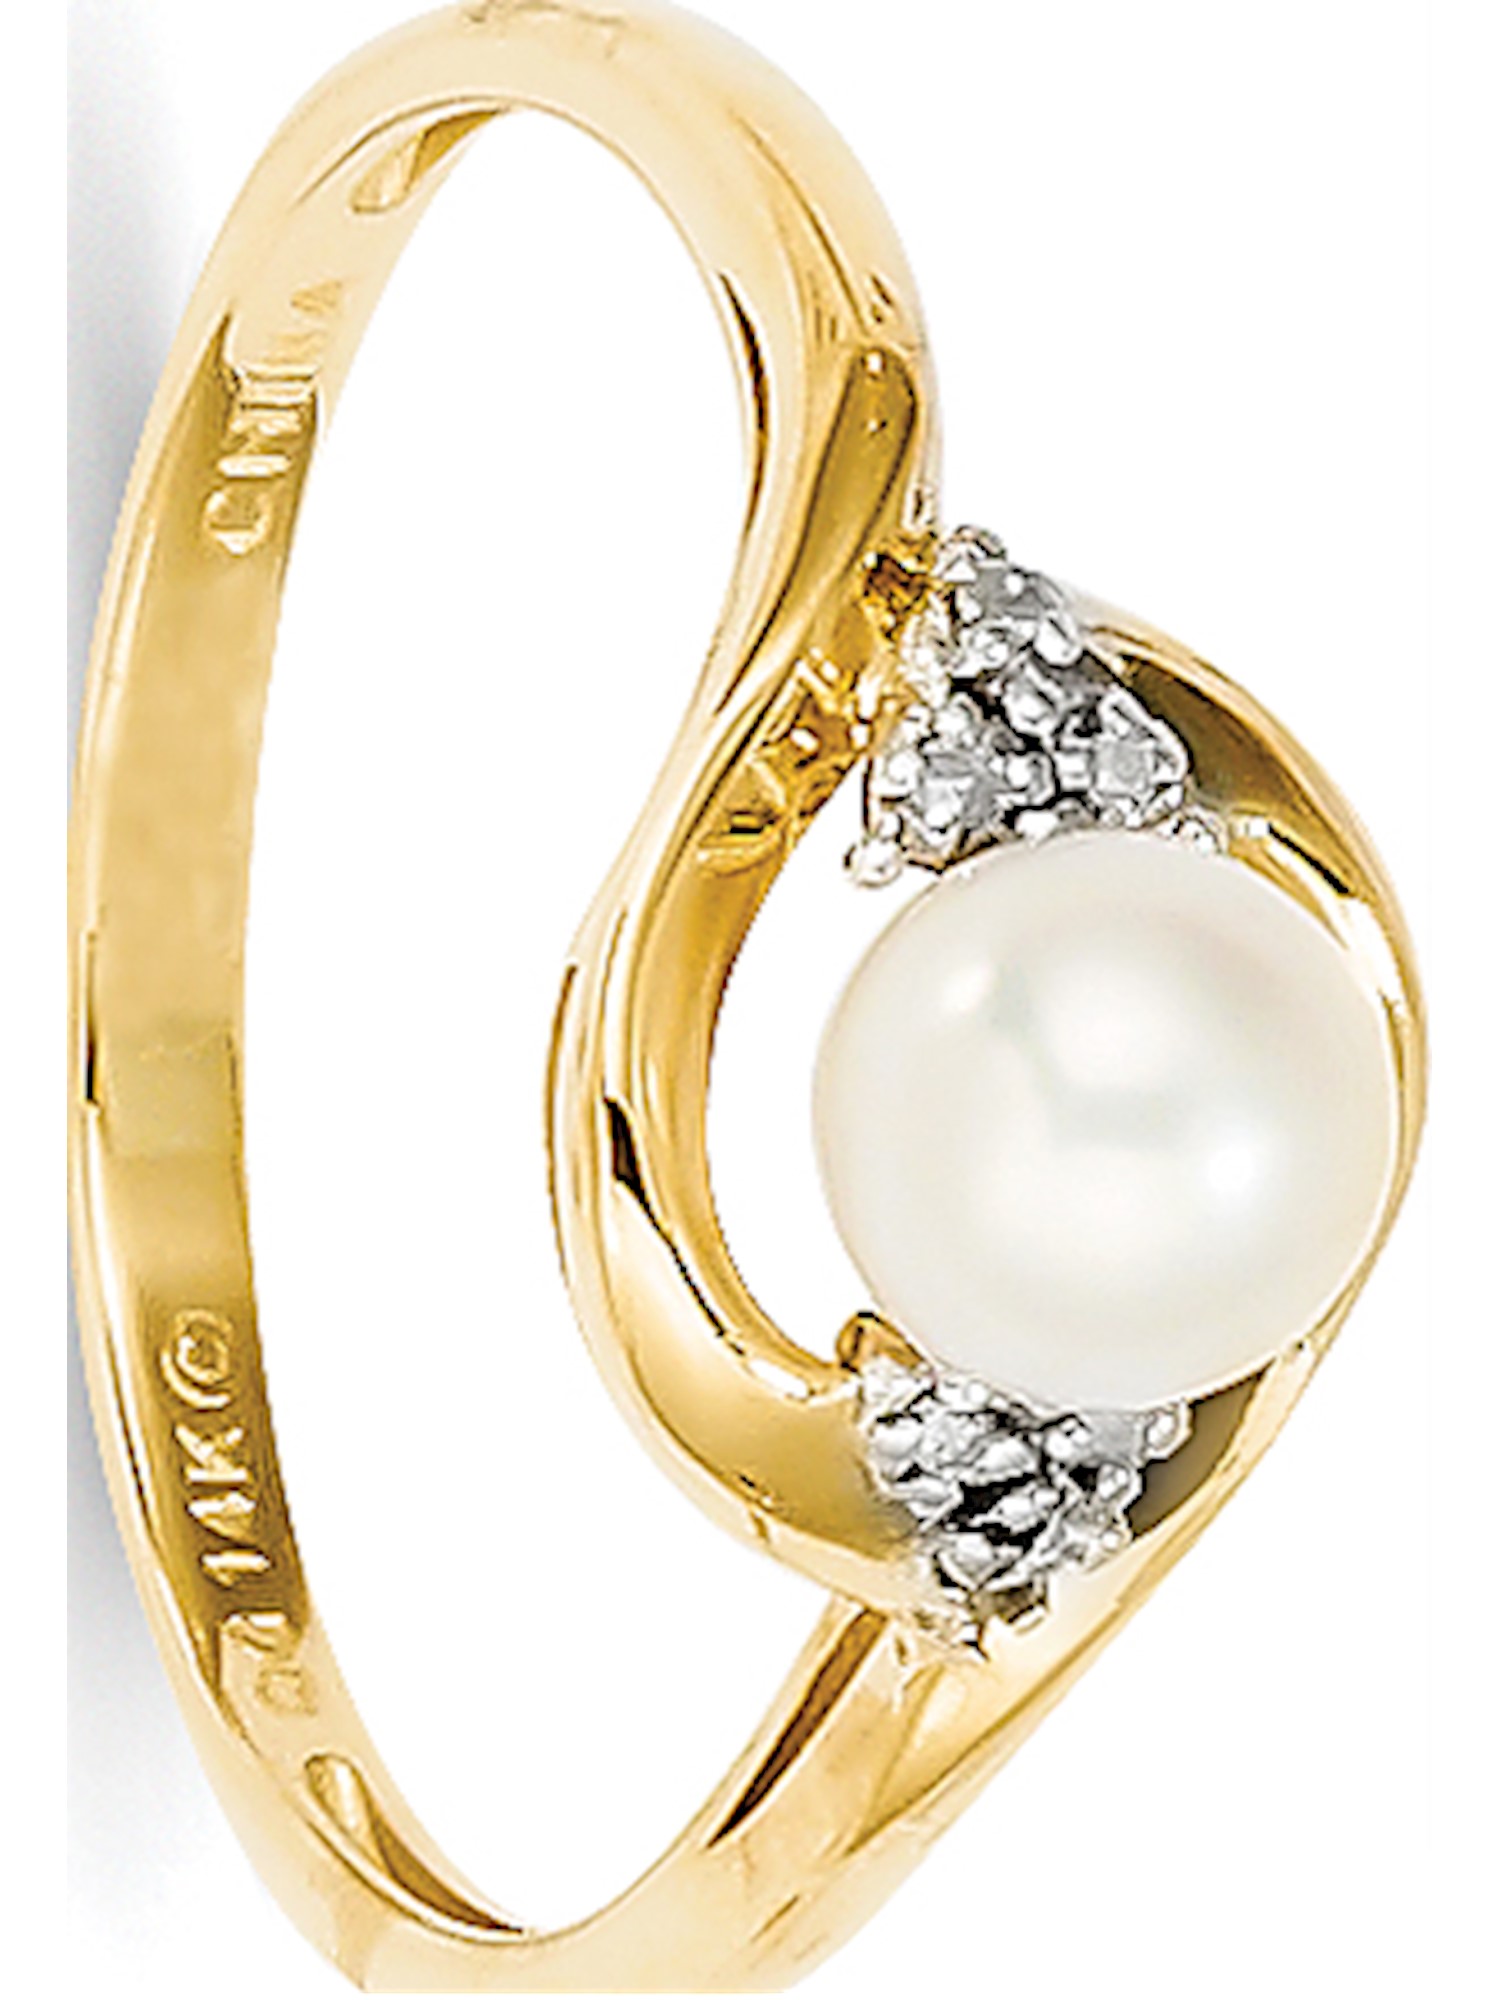 Slyq Jewelry Slyq Jewelry Leaf shape womens engagement rings 